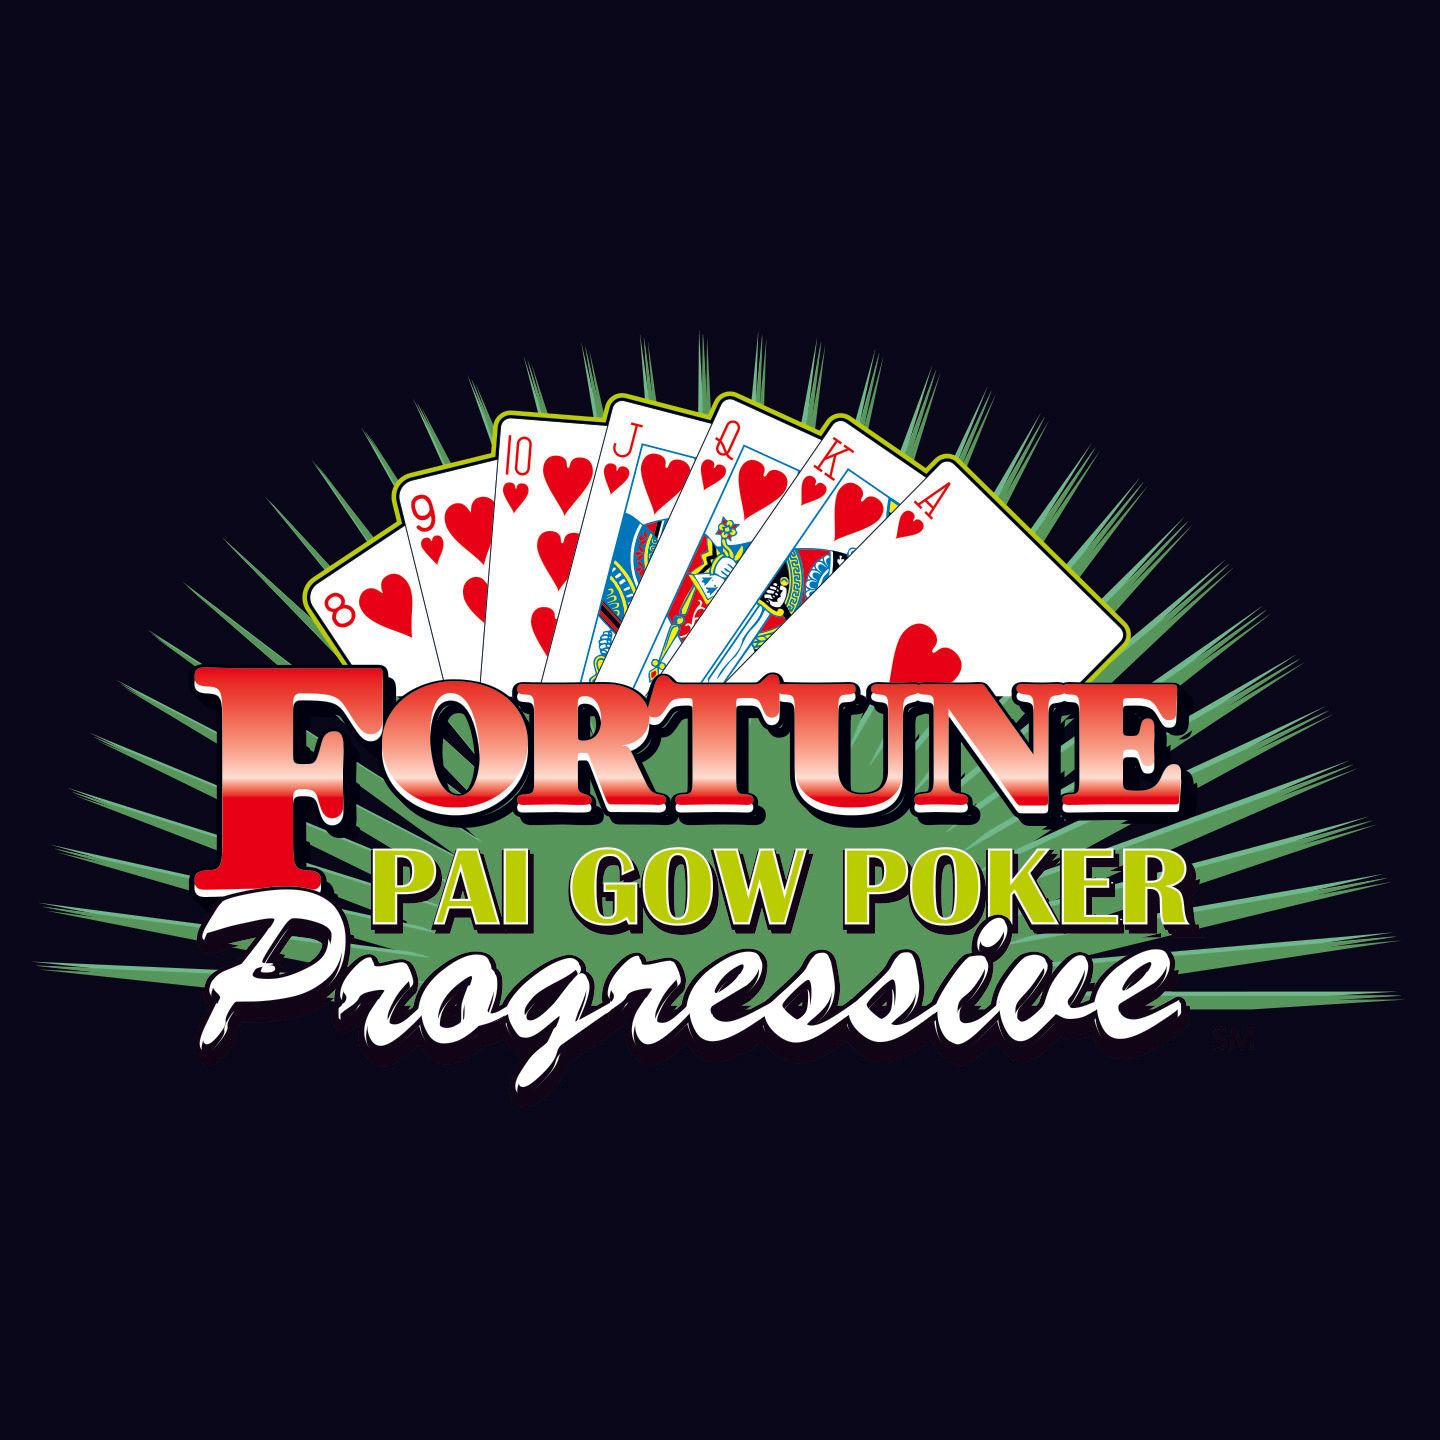 Fortune Pai Gow Poker Progressive logo